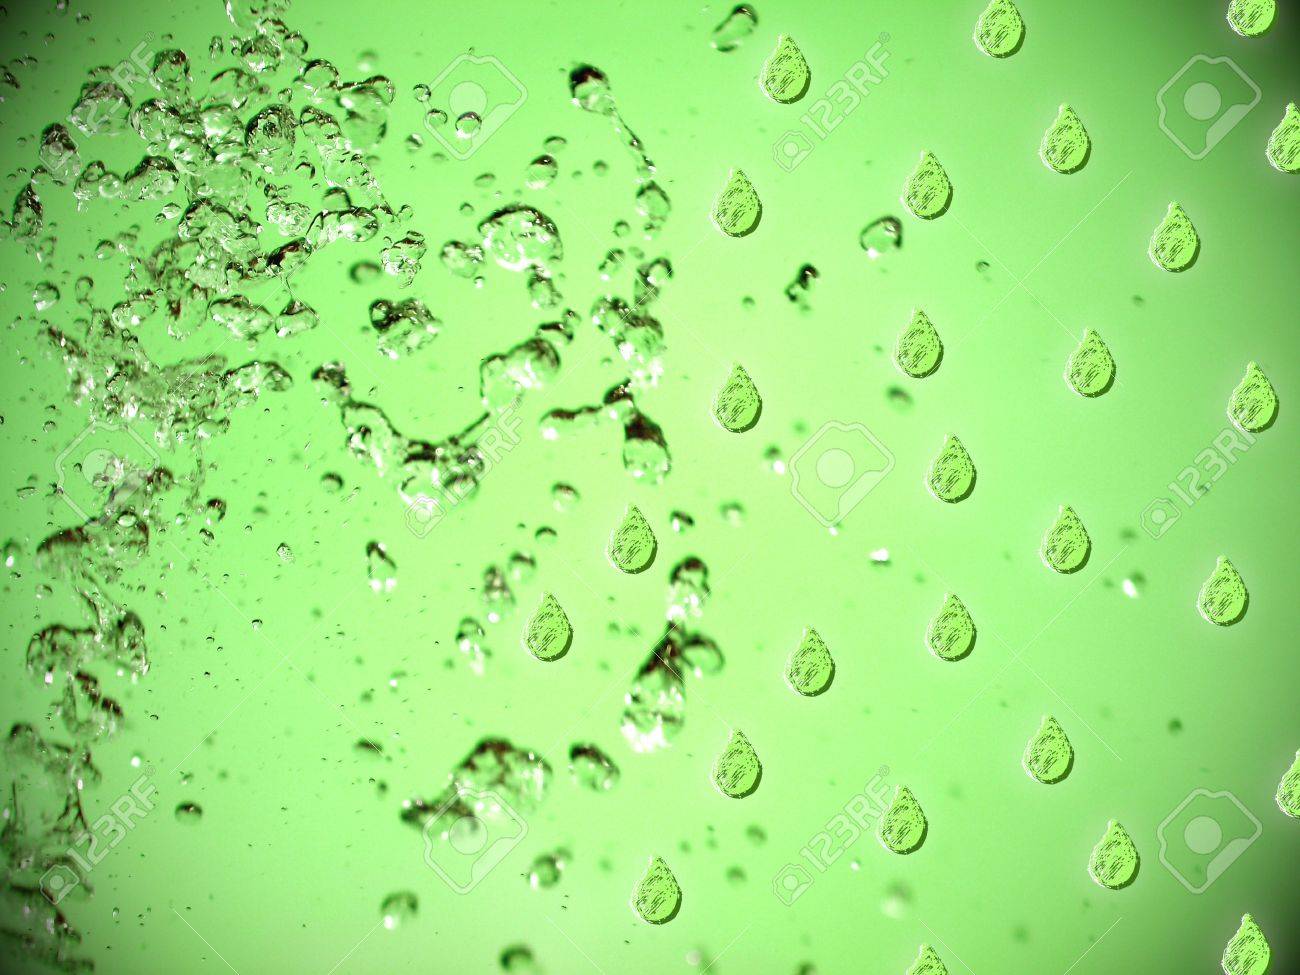 Lemon Green Background With Soda Drops Splashing Stock Photo